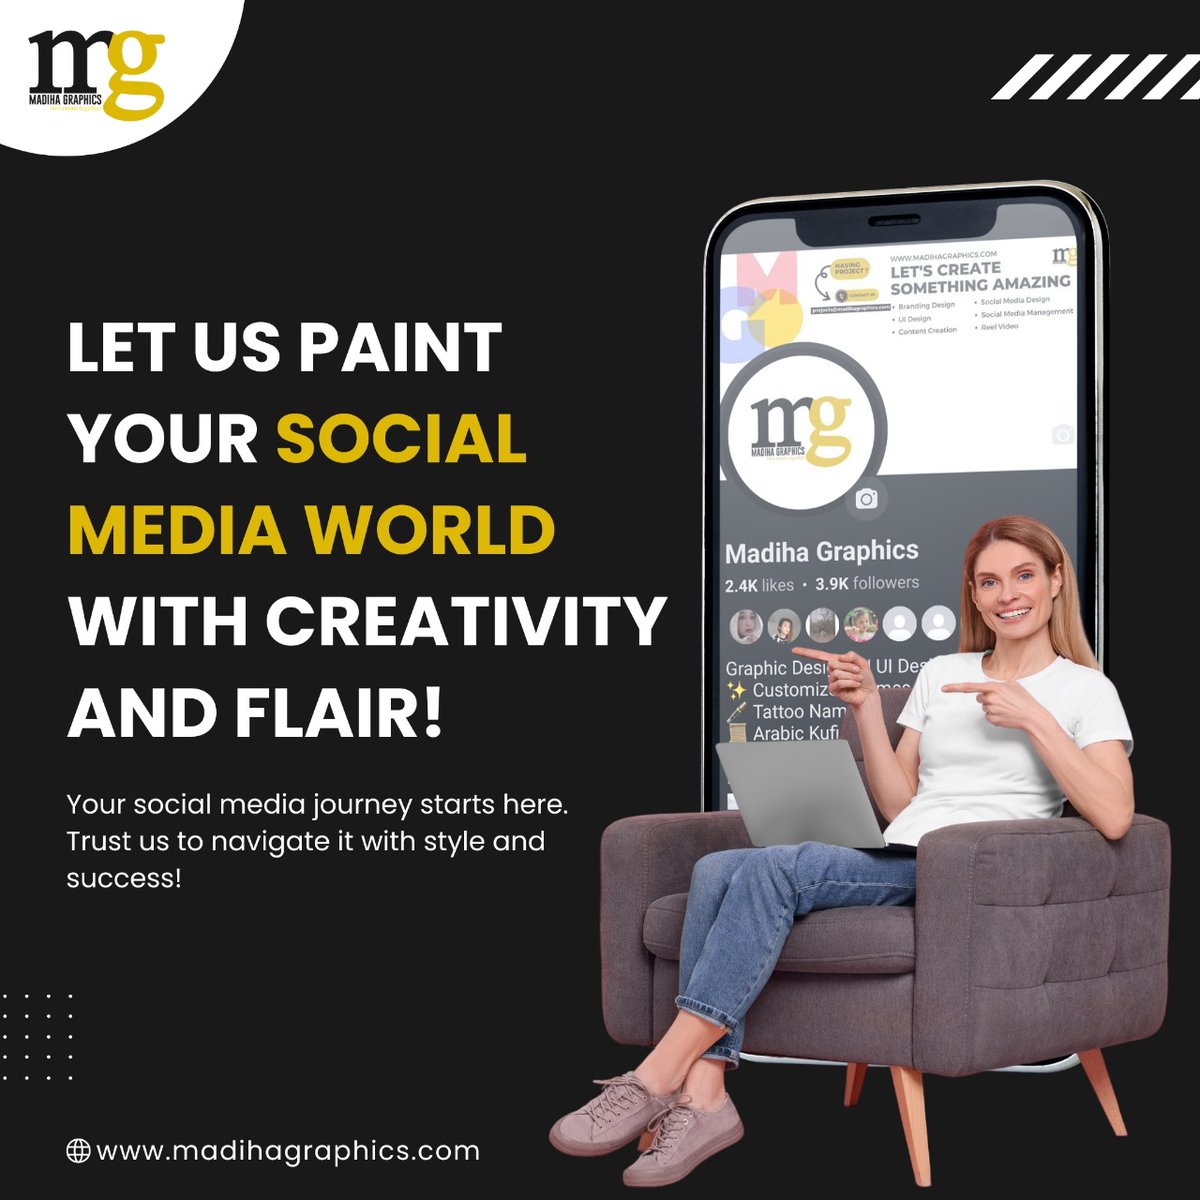 Color your social media with our creative touch!

#madihagraphics #SocialMediaMagic #CreativeFlair #DigitalArtistry #SocialMediaGurus #InnovativeContent #vibrantonlinepresence